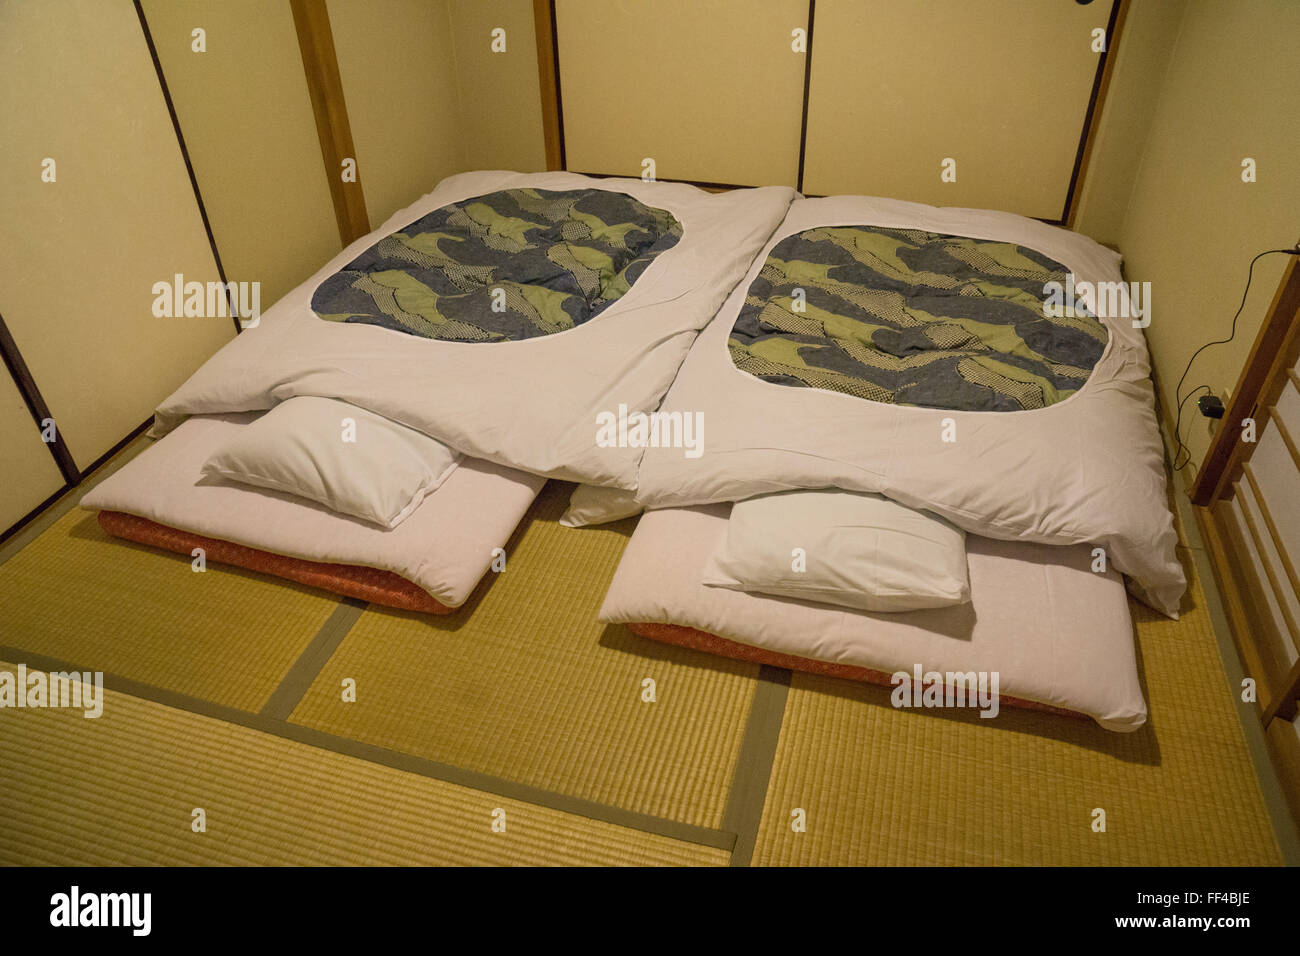 traditional roykan Hakone Japan sleeping quarters on tatami mat Stock Photo